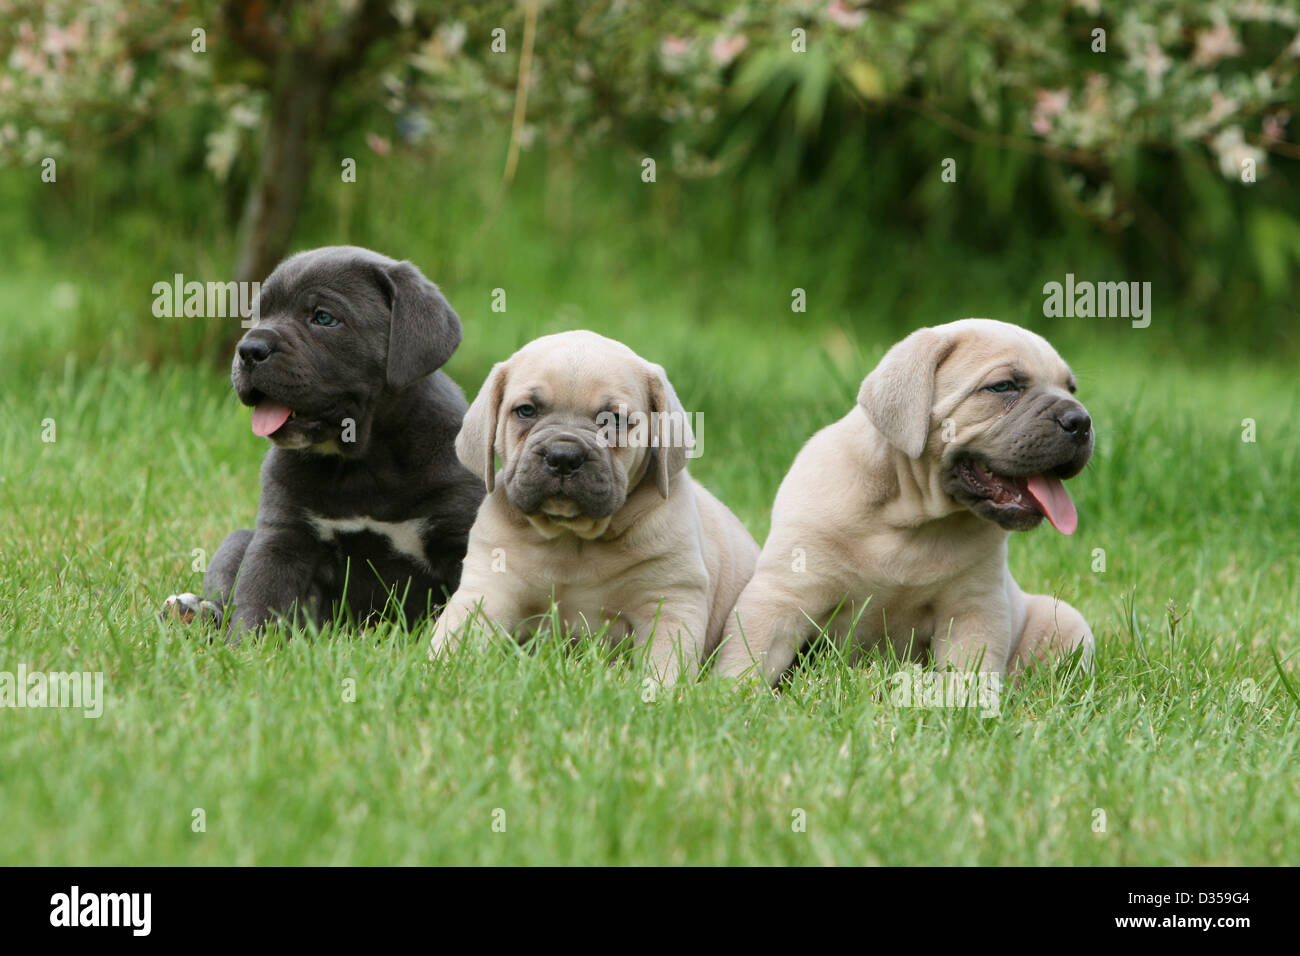 Dog Cane Corso / Italian Molosser  three puppies different colors sitting in a garden Stock Photo